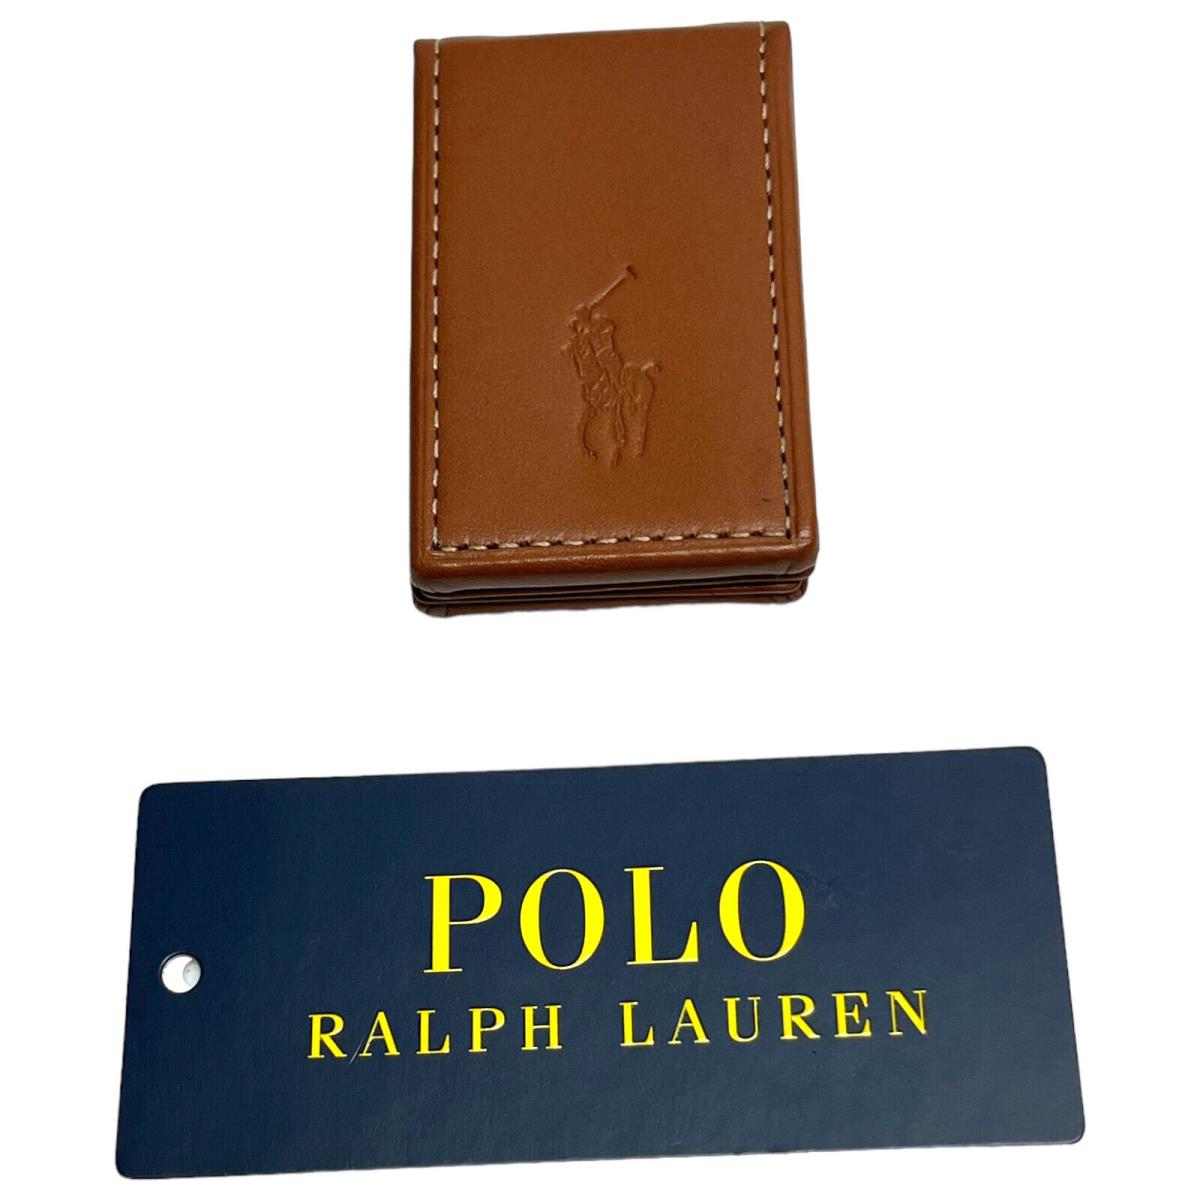 Polo Ralph Lauren Brown Leather Money Clip Magnetic Compact Case Mens Wallet